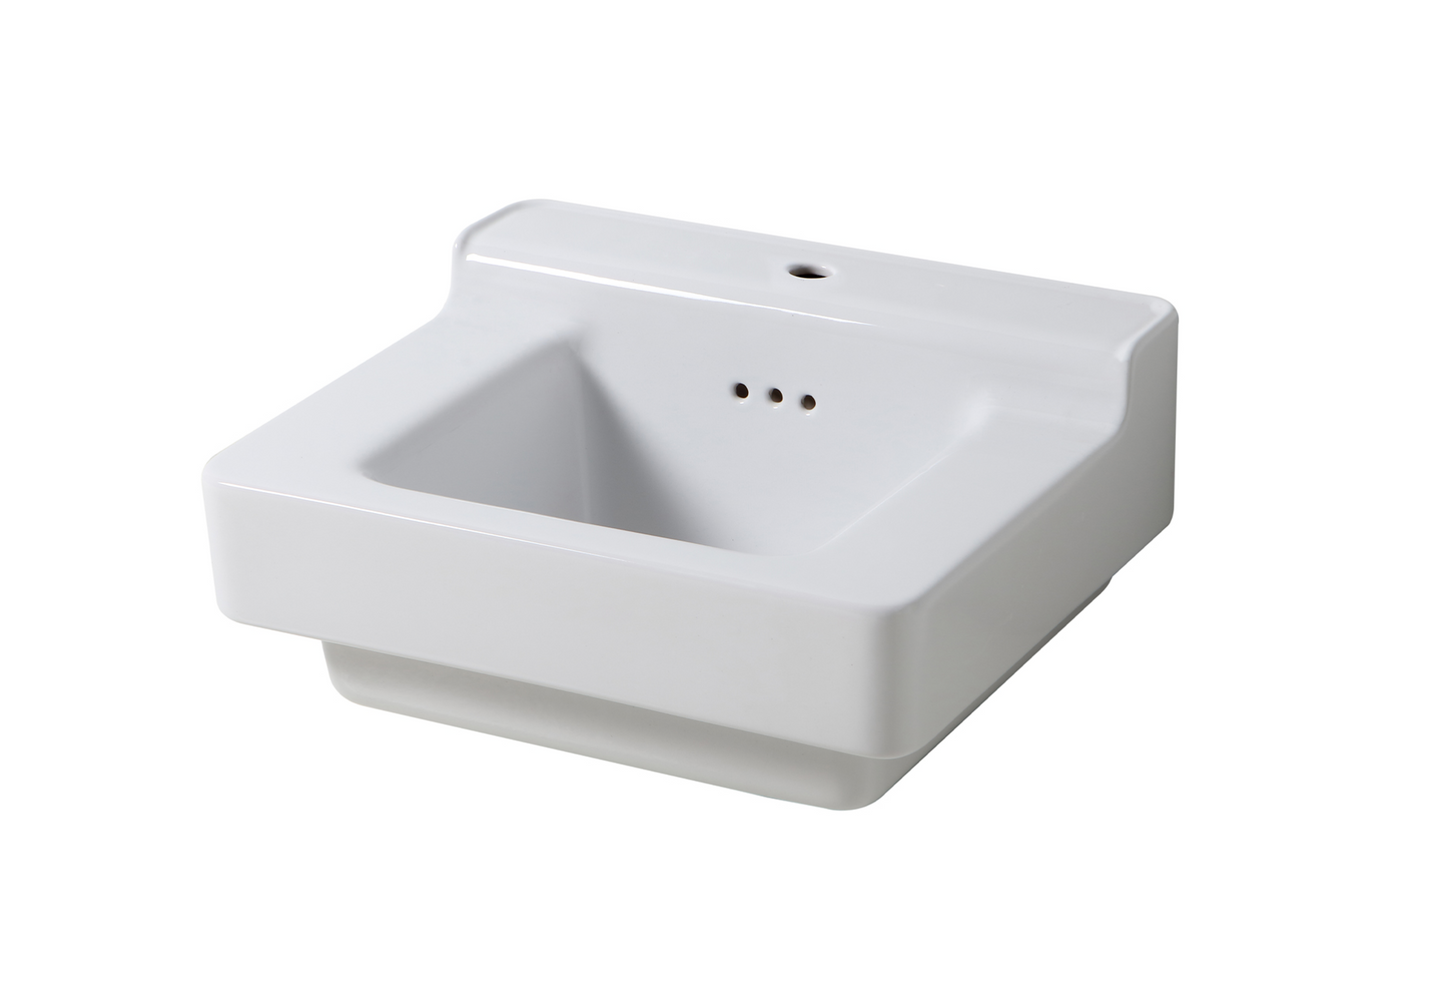 Industrialis ceramic washbasin by Balneo Toscia Industrial style